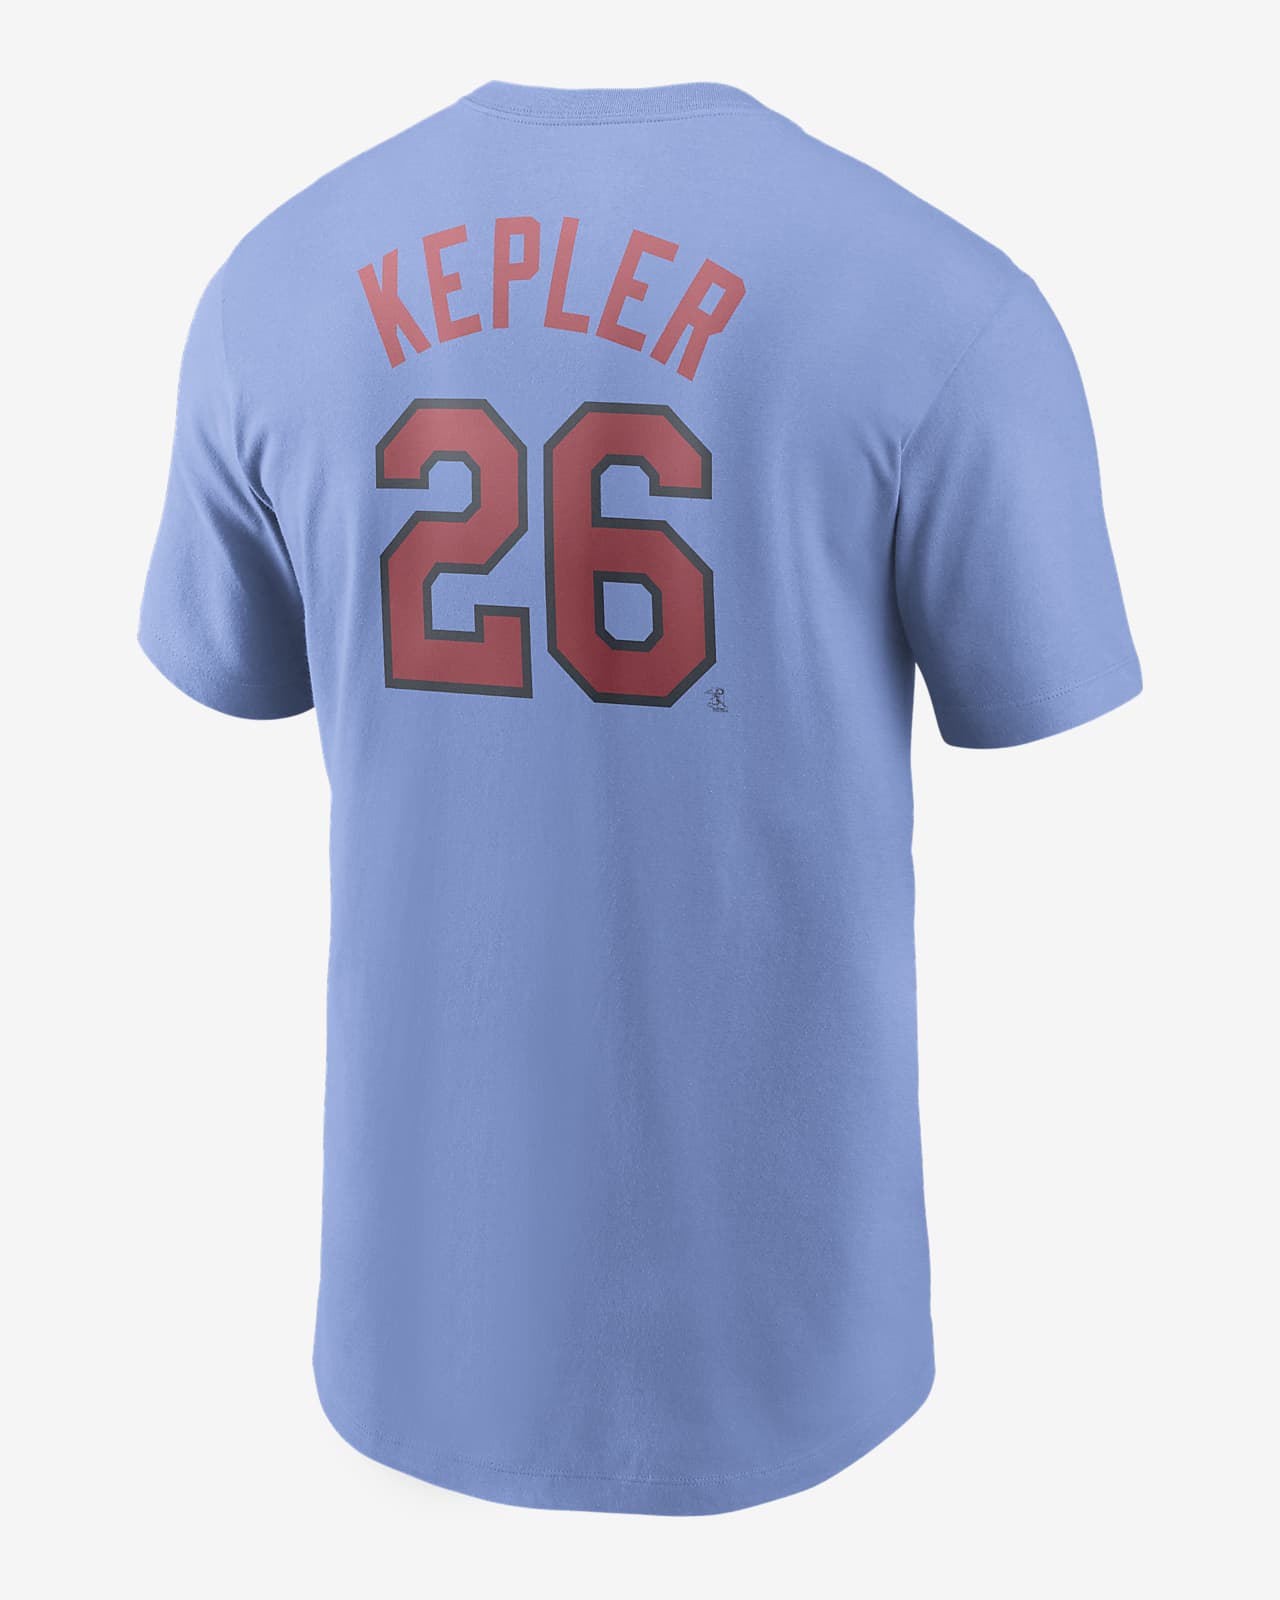 max kepler baby blue jersey